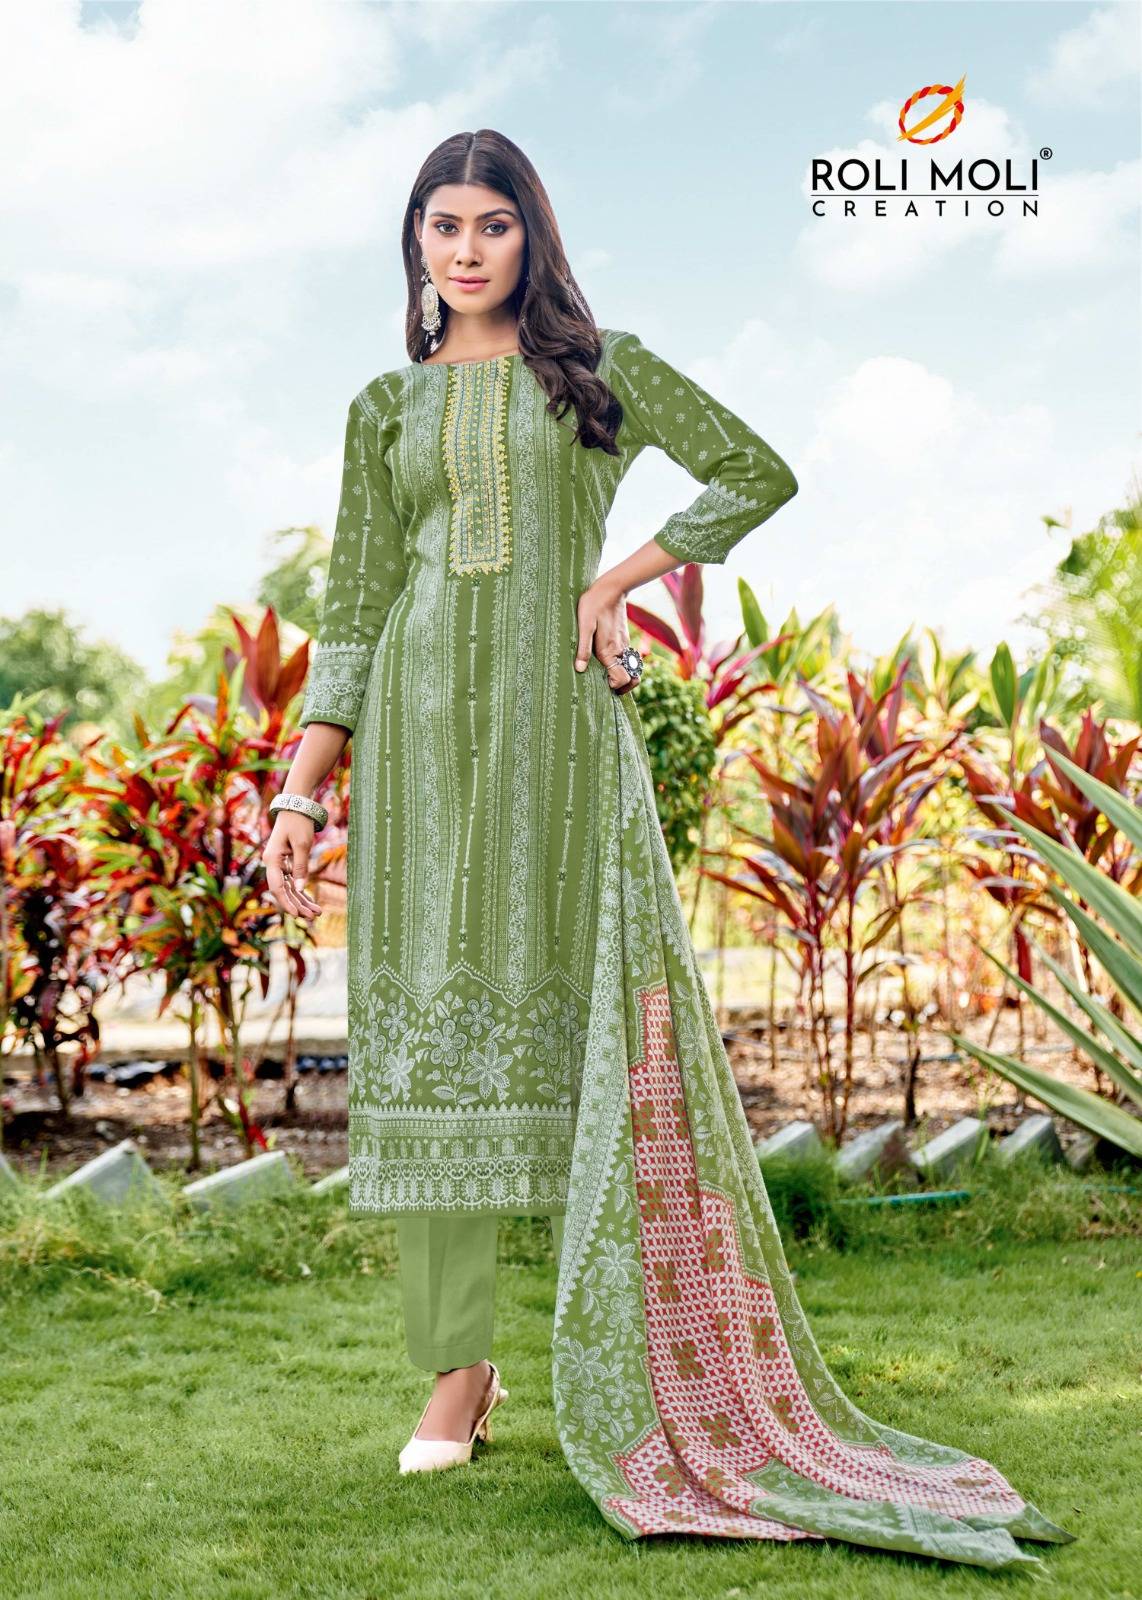 Dilara By Roli Moli 3001 To 3008 Series Beautiful Festive Suits Stylish Fancy Colorful Casual Wear & Ethnic Wear Heavy Pashmina Print Dresses At Wholesale Price